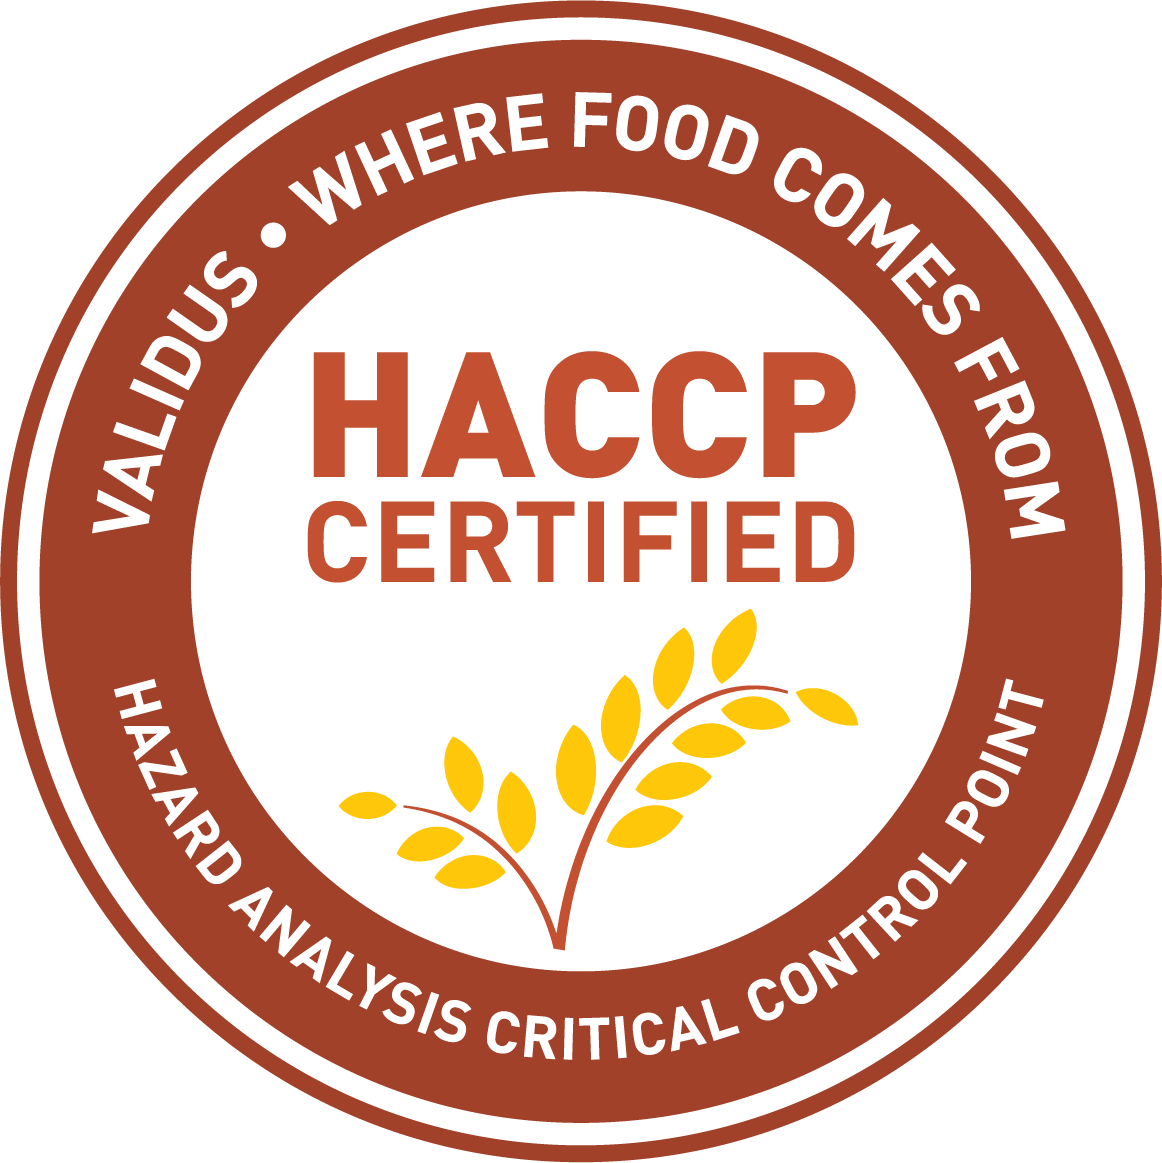 Validus-WFCF-HACCP-logo